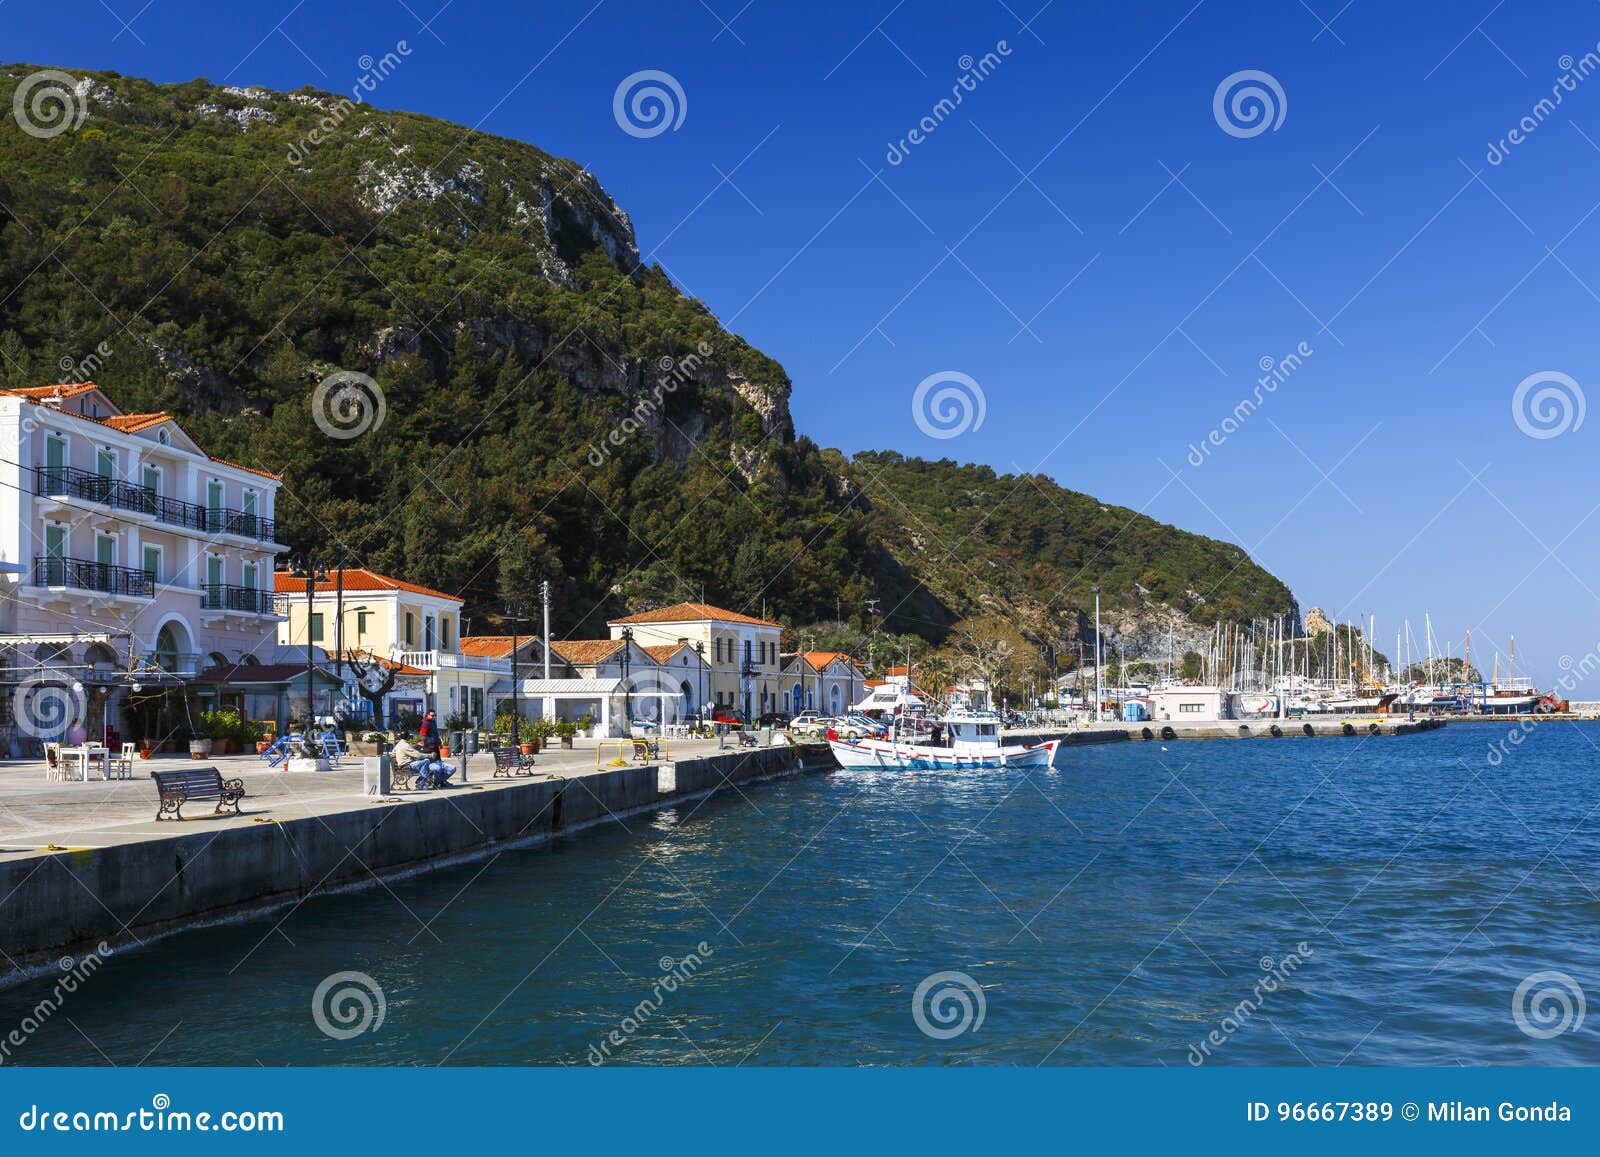 Samos Island. editorial stock image. Image of village - 96667389